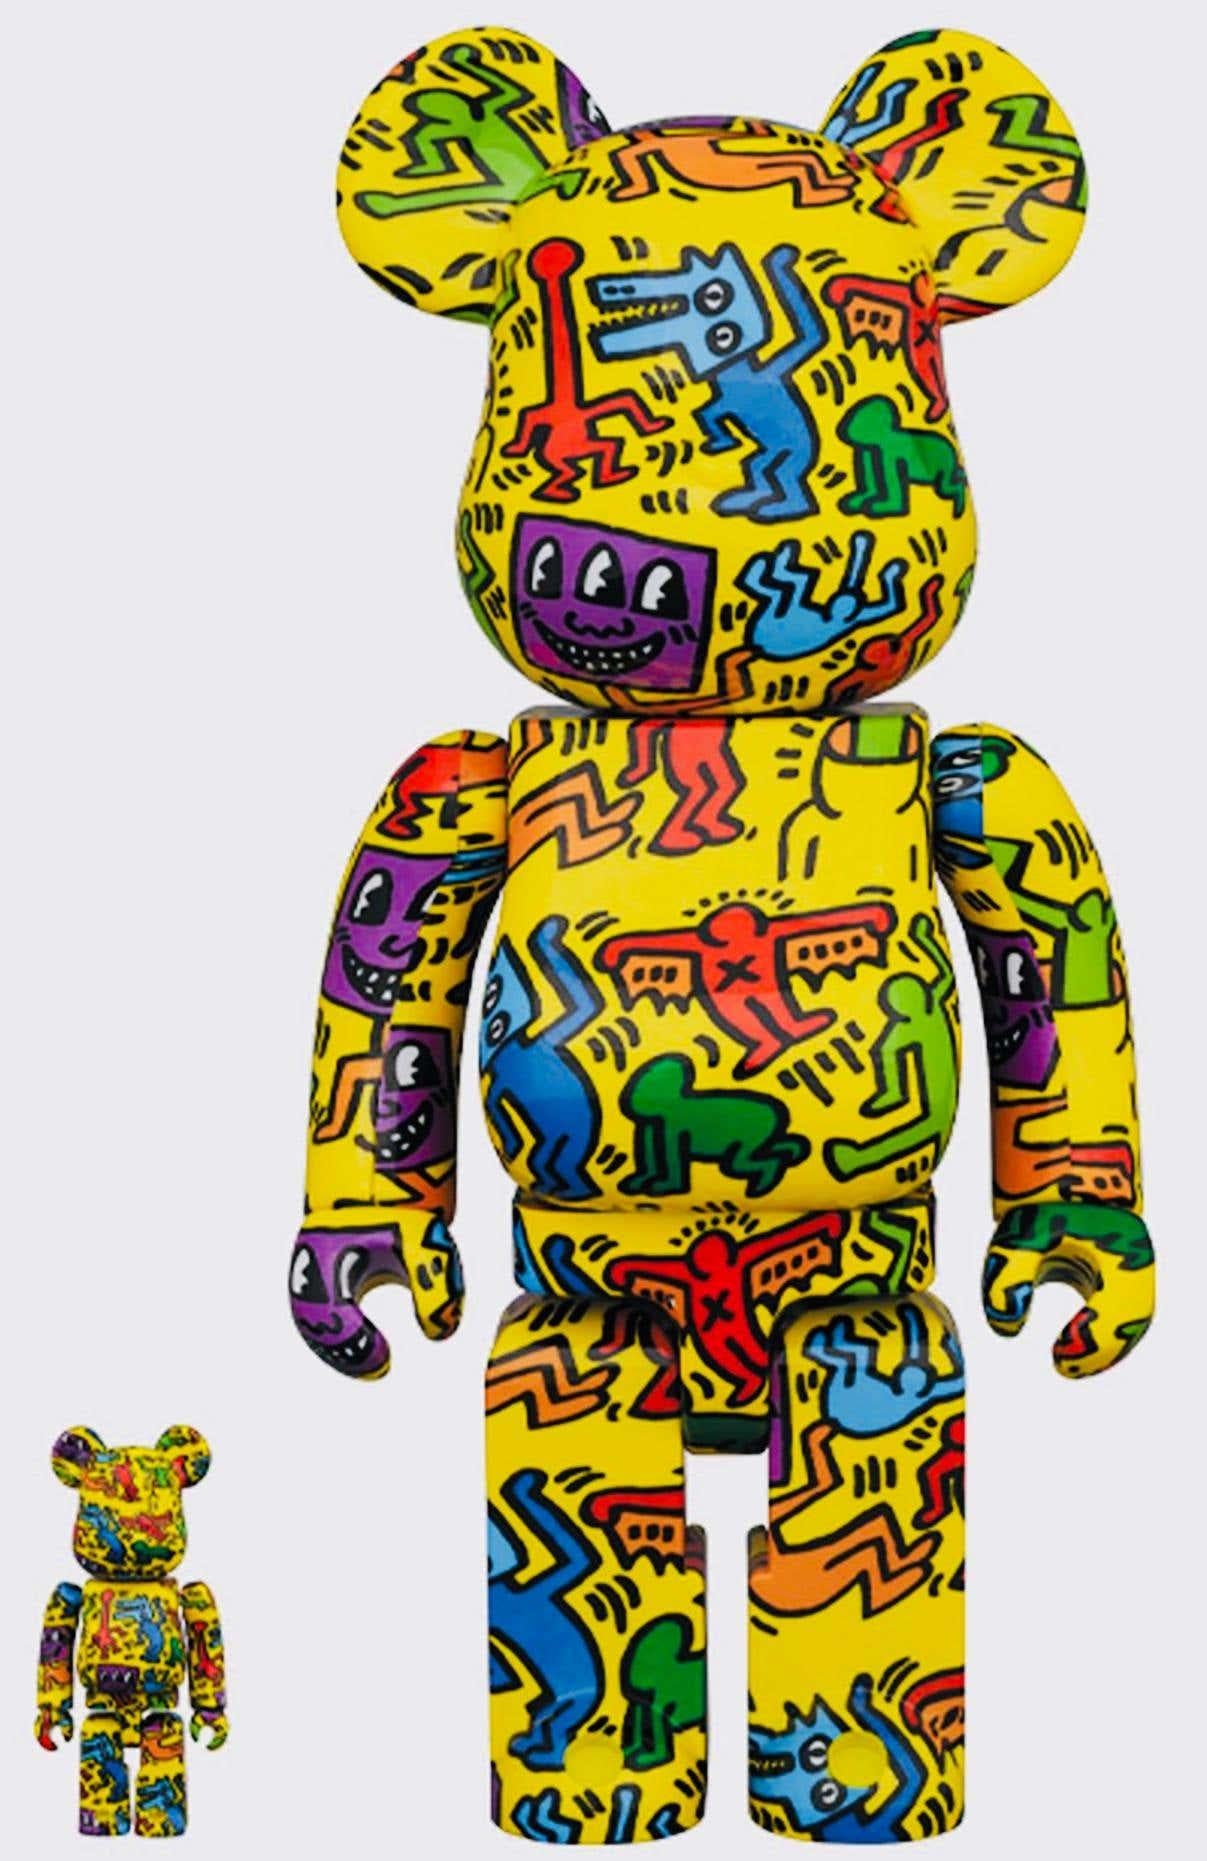 Basquiat Warhol Haring Bearbrick 400%: set of 6 works (Basquiat BE@RBRICK) For Sale 1